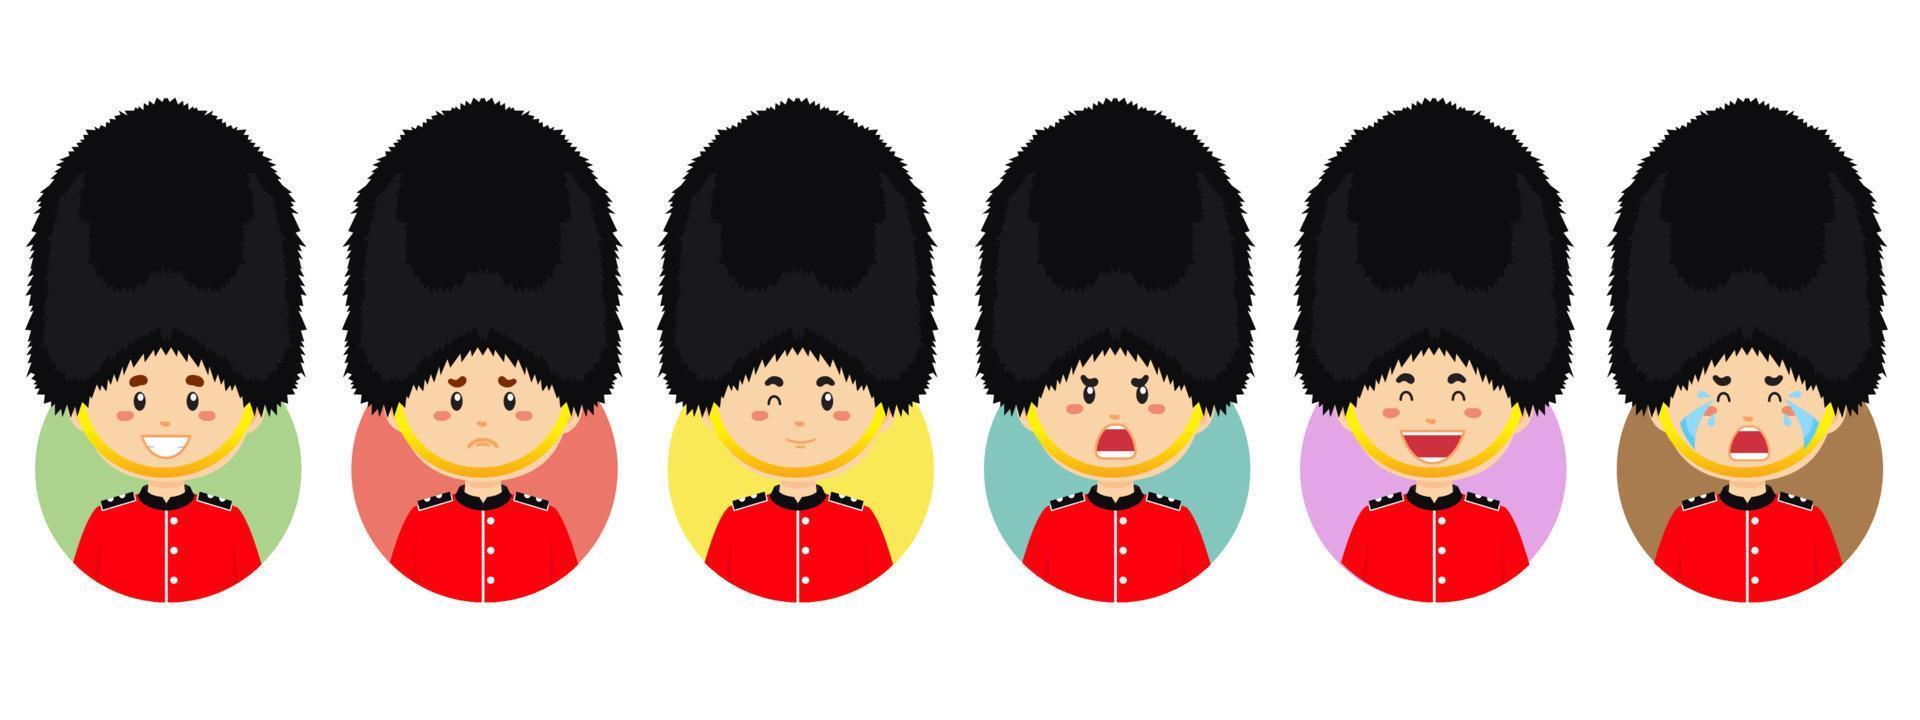 brittisk avatar med olika uttryck vektor